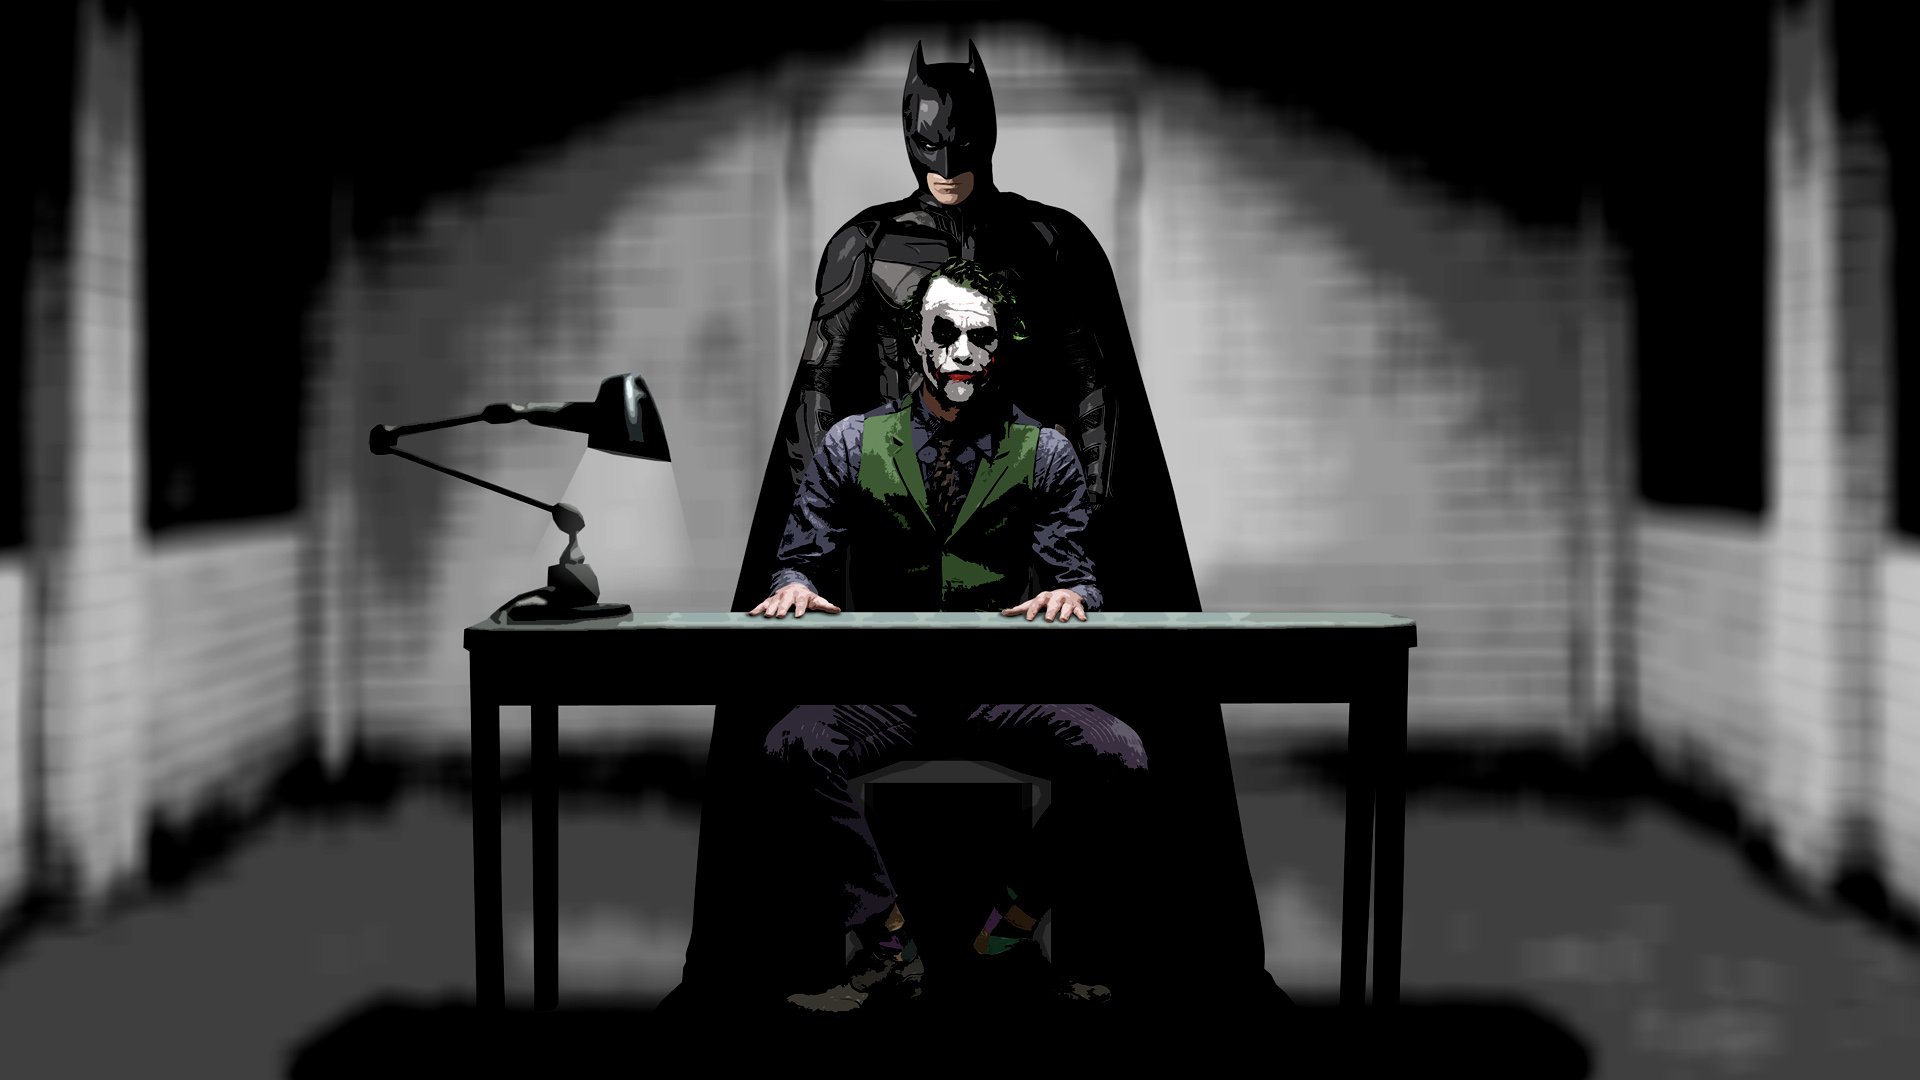 Batman the Joker Full HD Desktop Wallpapers 1080p 1920x1080